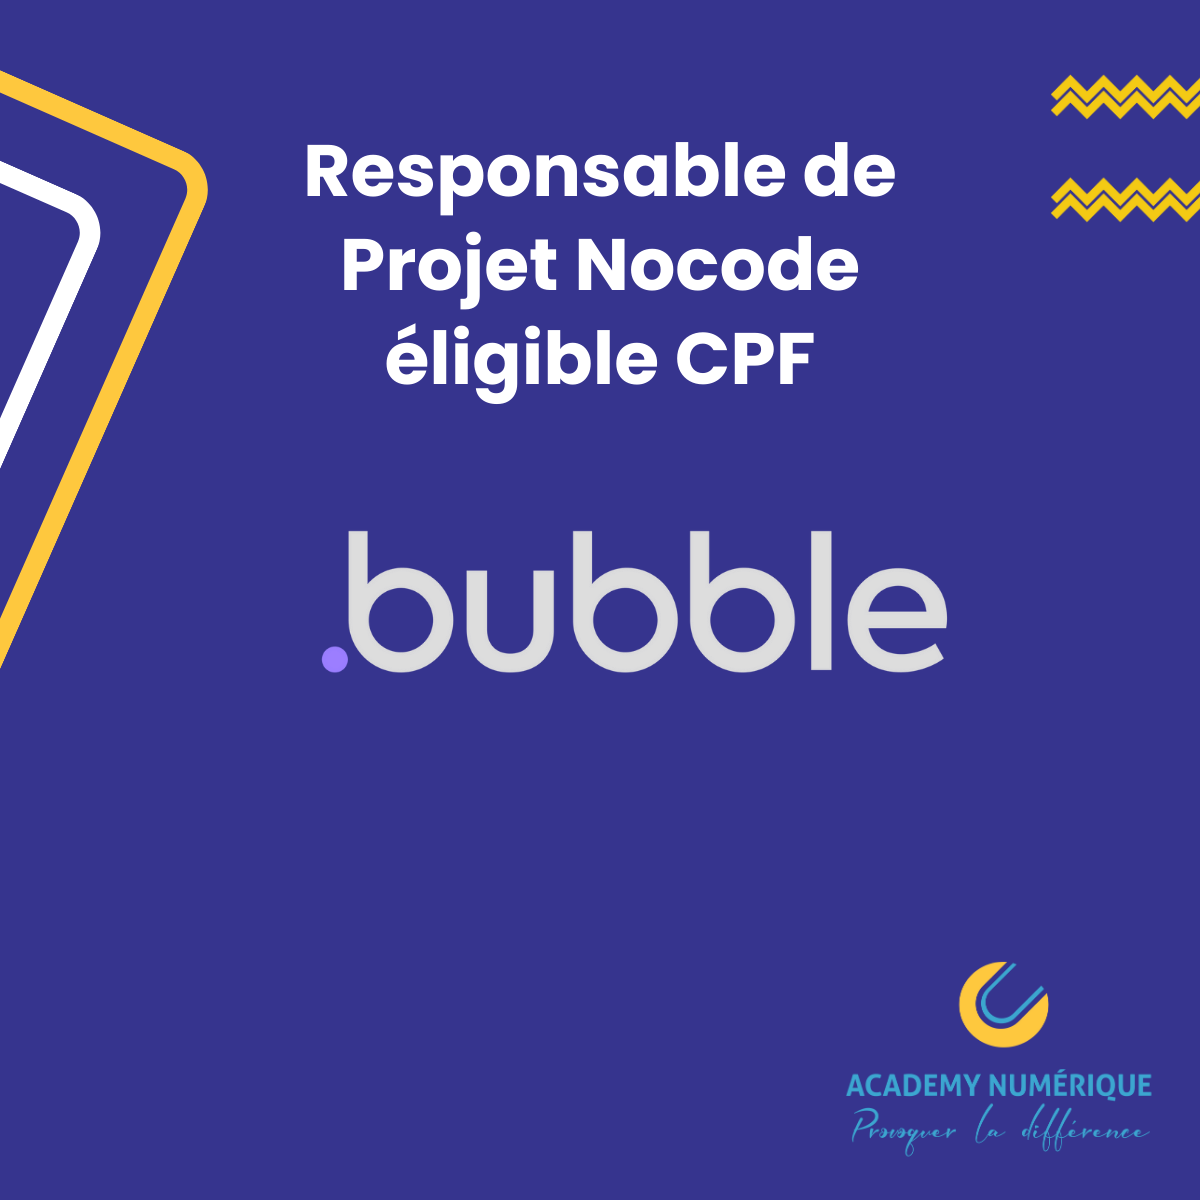 responsable de projet nocode bubble eligible CPF